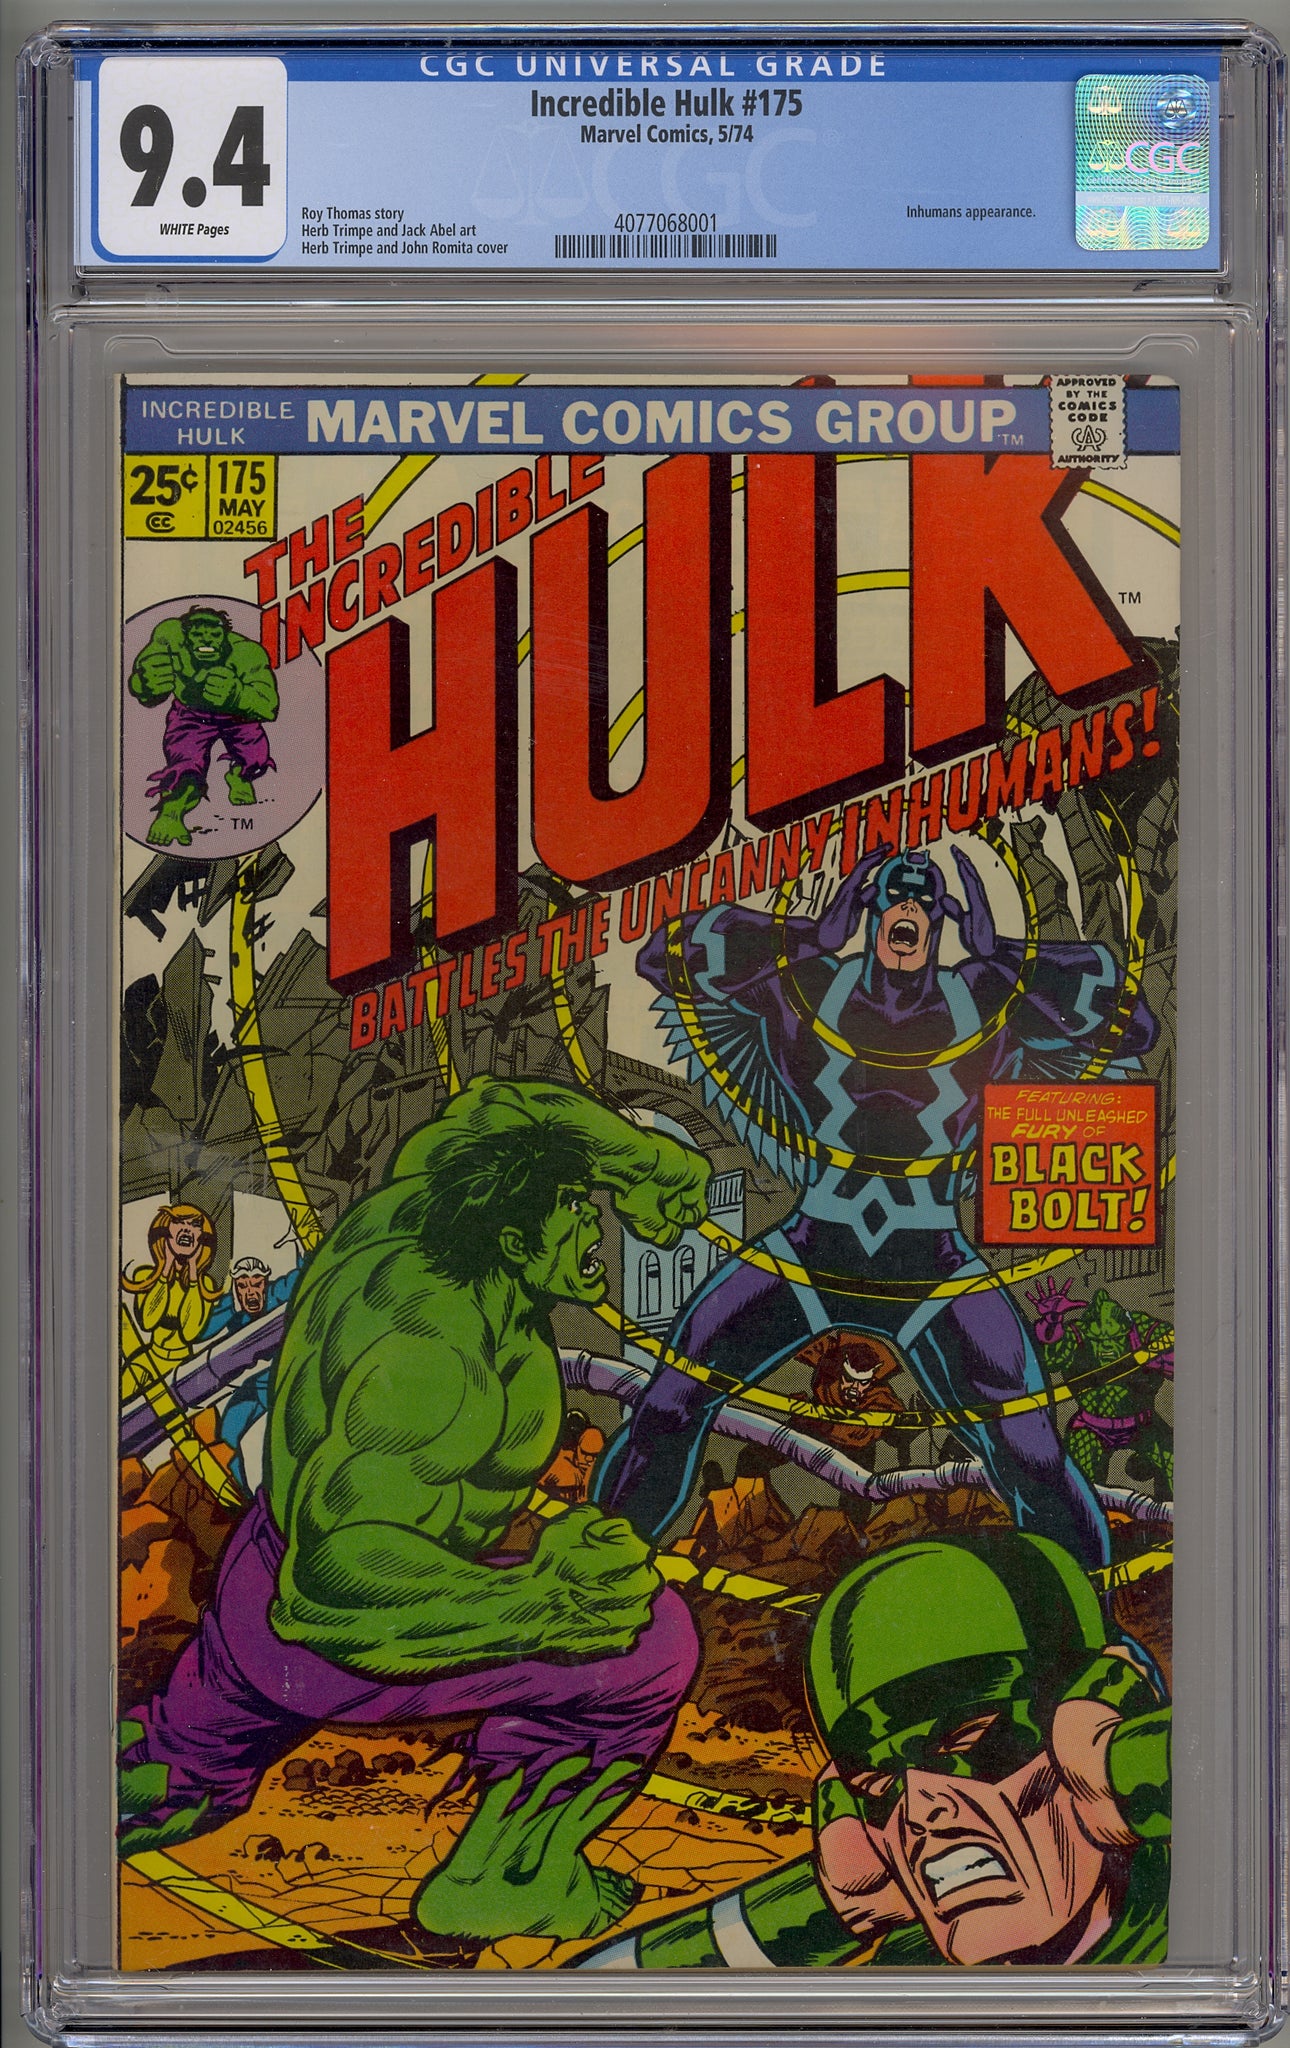 Incredible Hulk #175 (1974) Inhumans